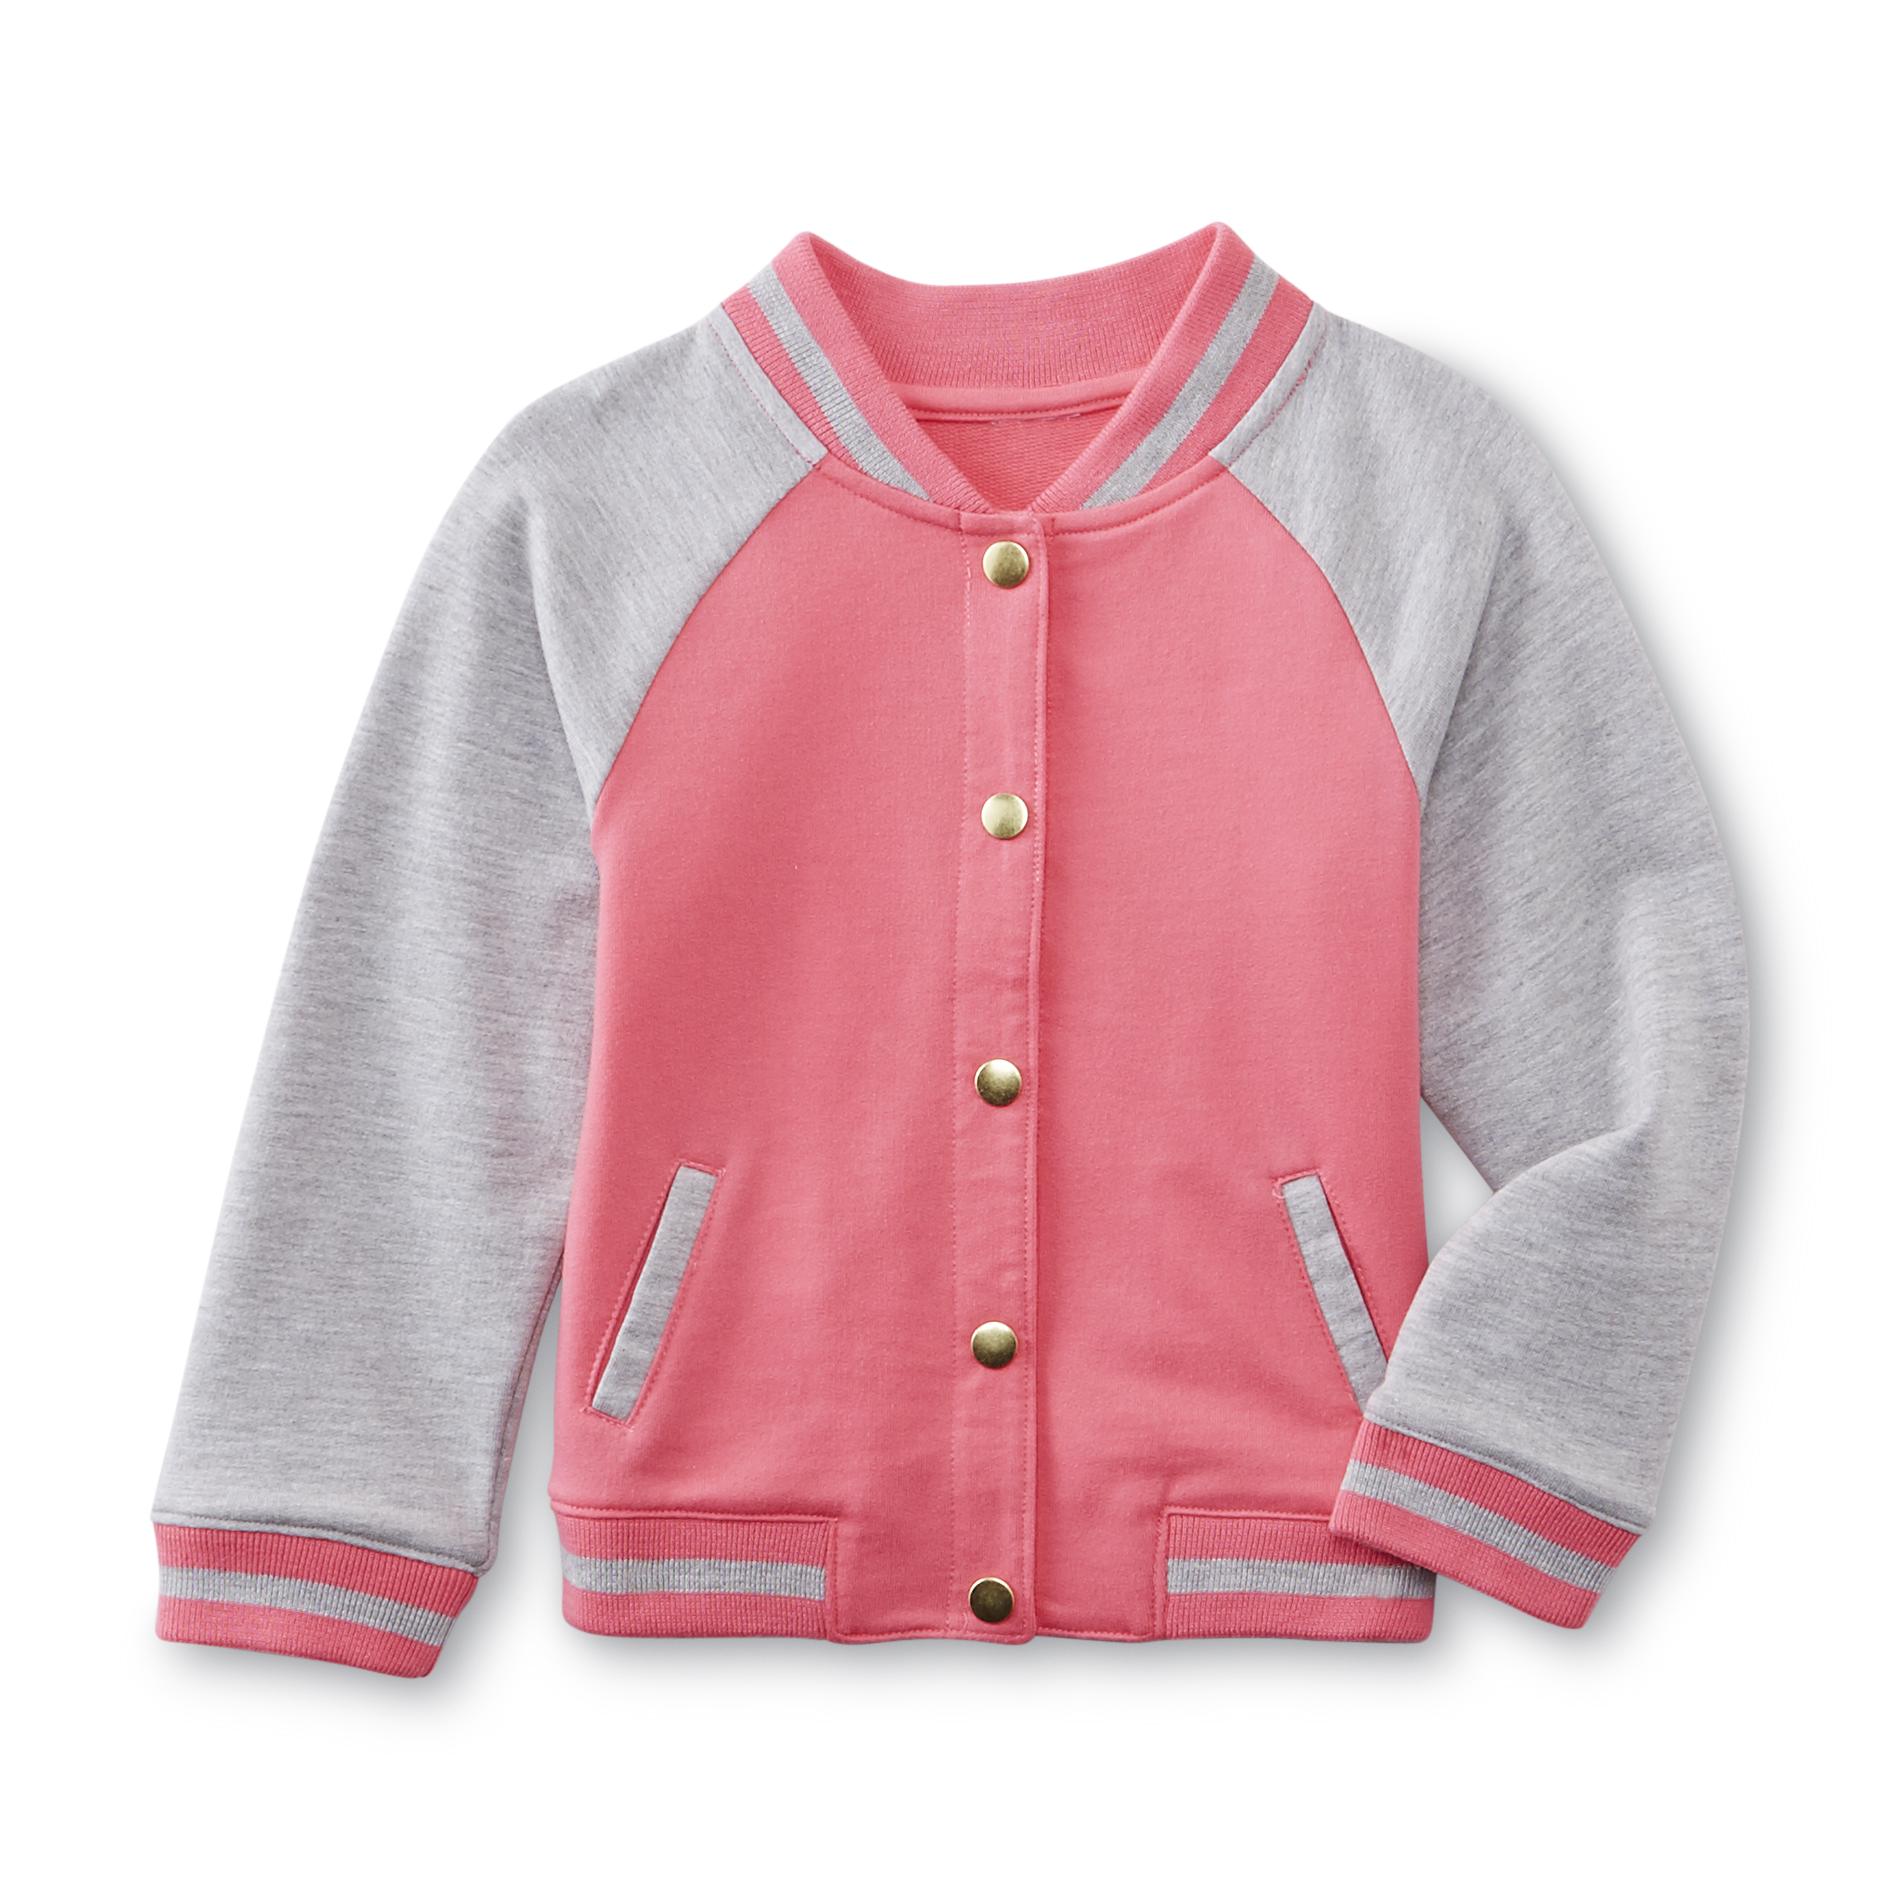 Infant & Toddler Girl's Varsity Jacket - Colorblock